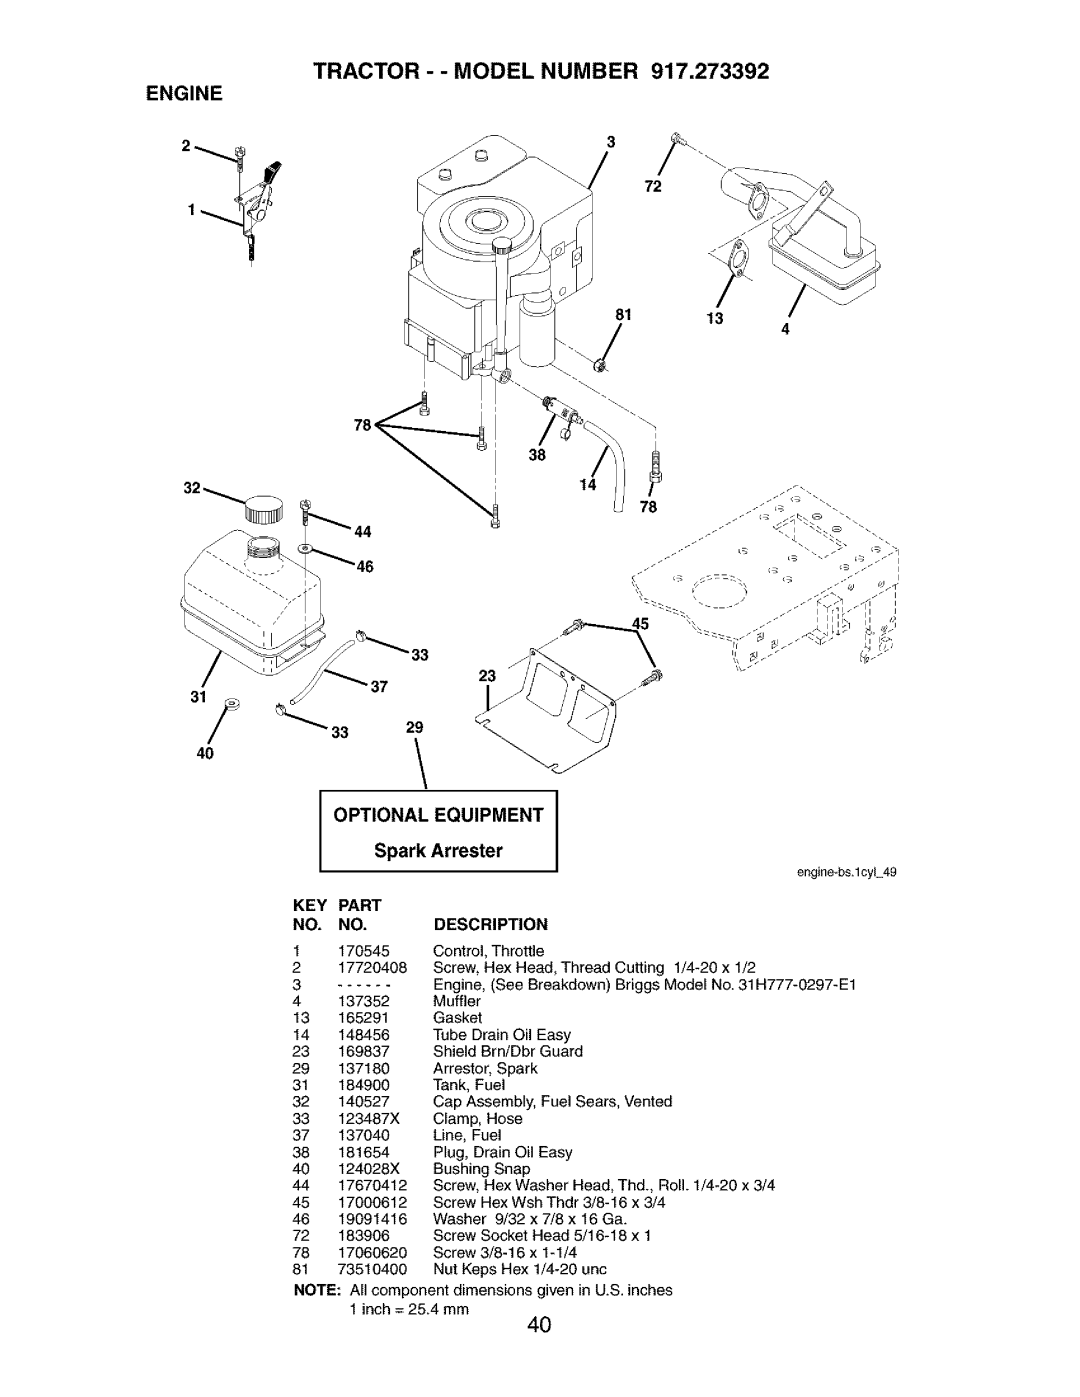 Craftsman 917.273392 manual Engine, OPTIONAL EQUIPMENT Spark Arrester, Key Part No. No.Description 